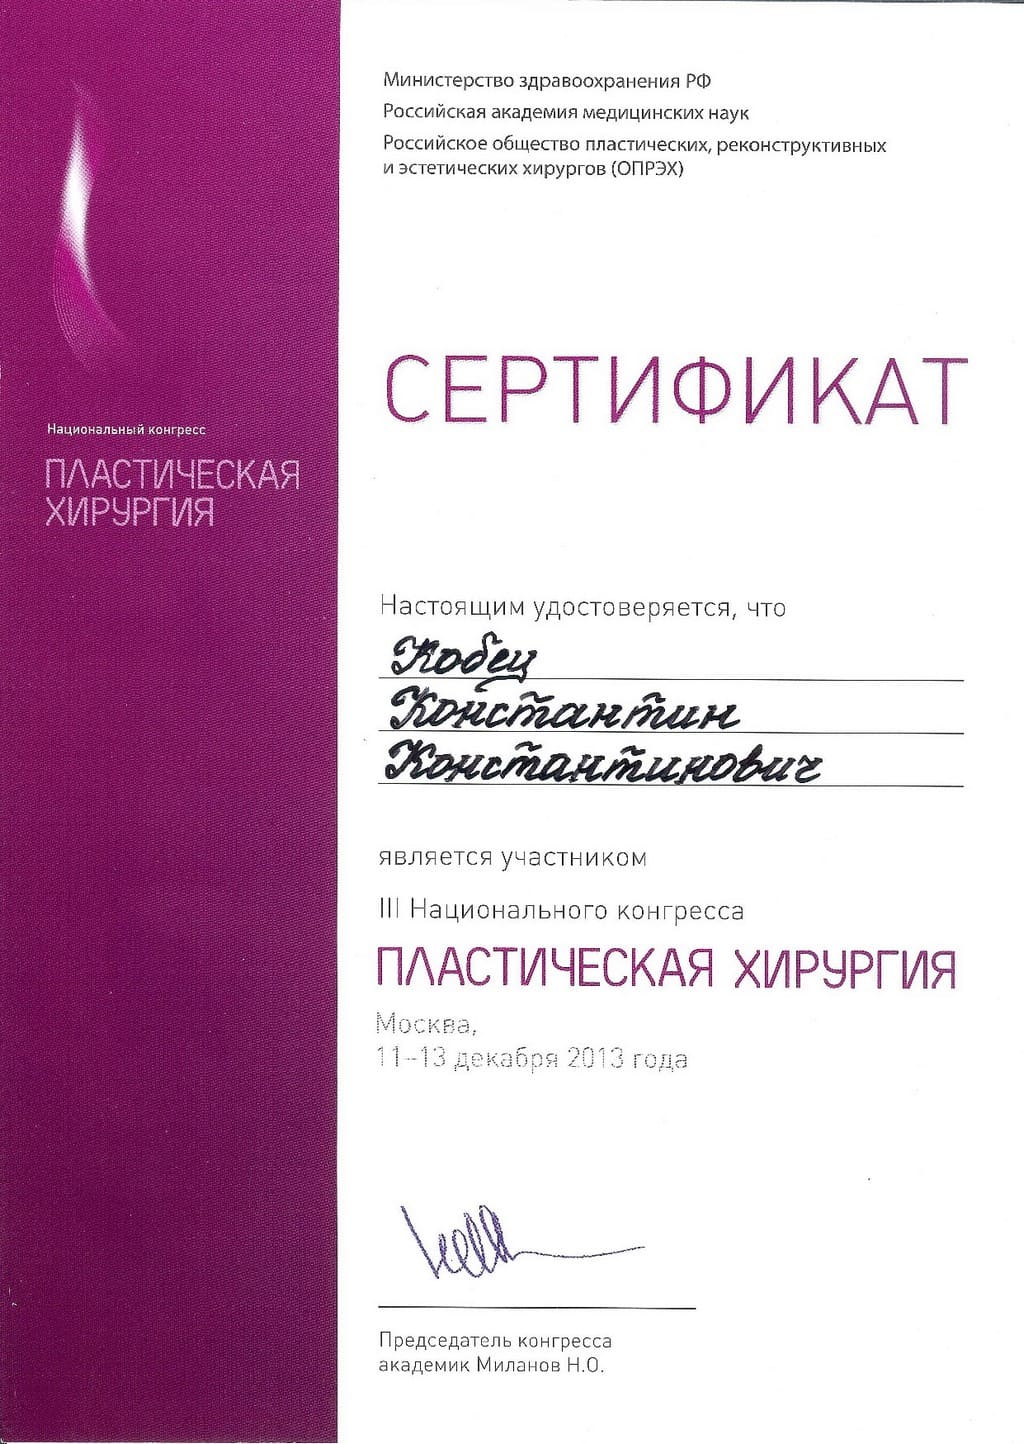 2013_12_11-13_Kobets_K_iii-nacionalnyi-kongress-plasticheskaya-hirurgiya.jpg